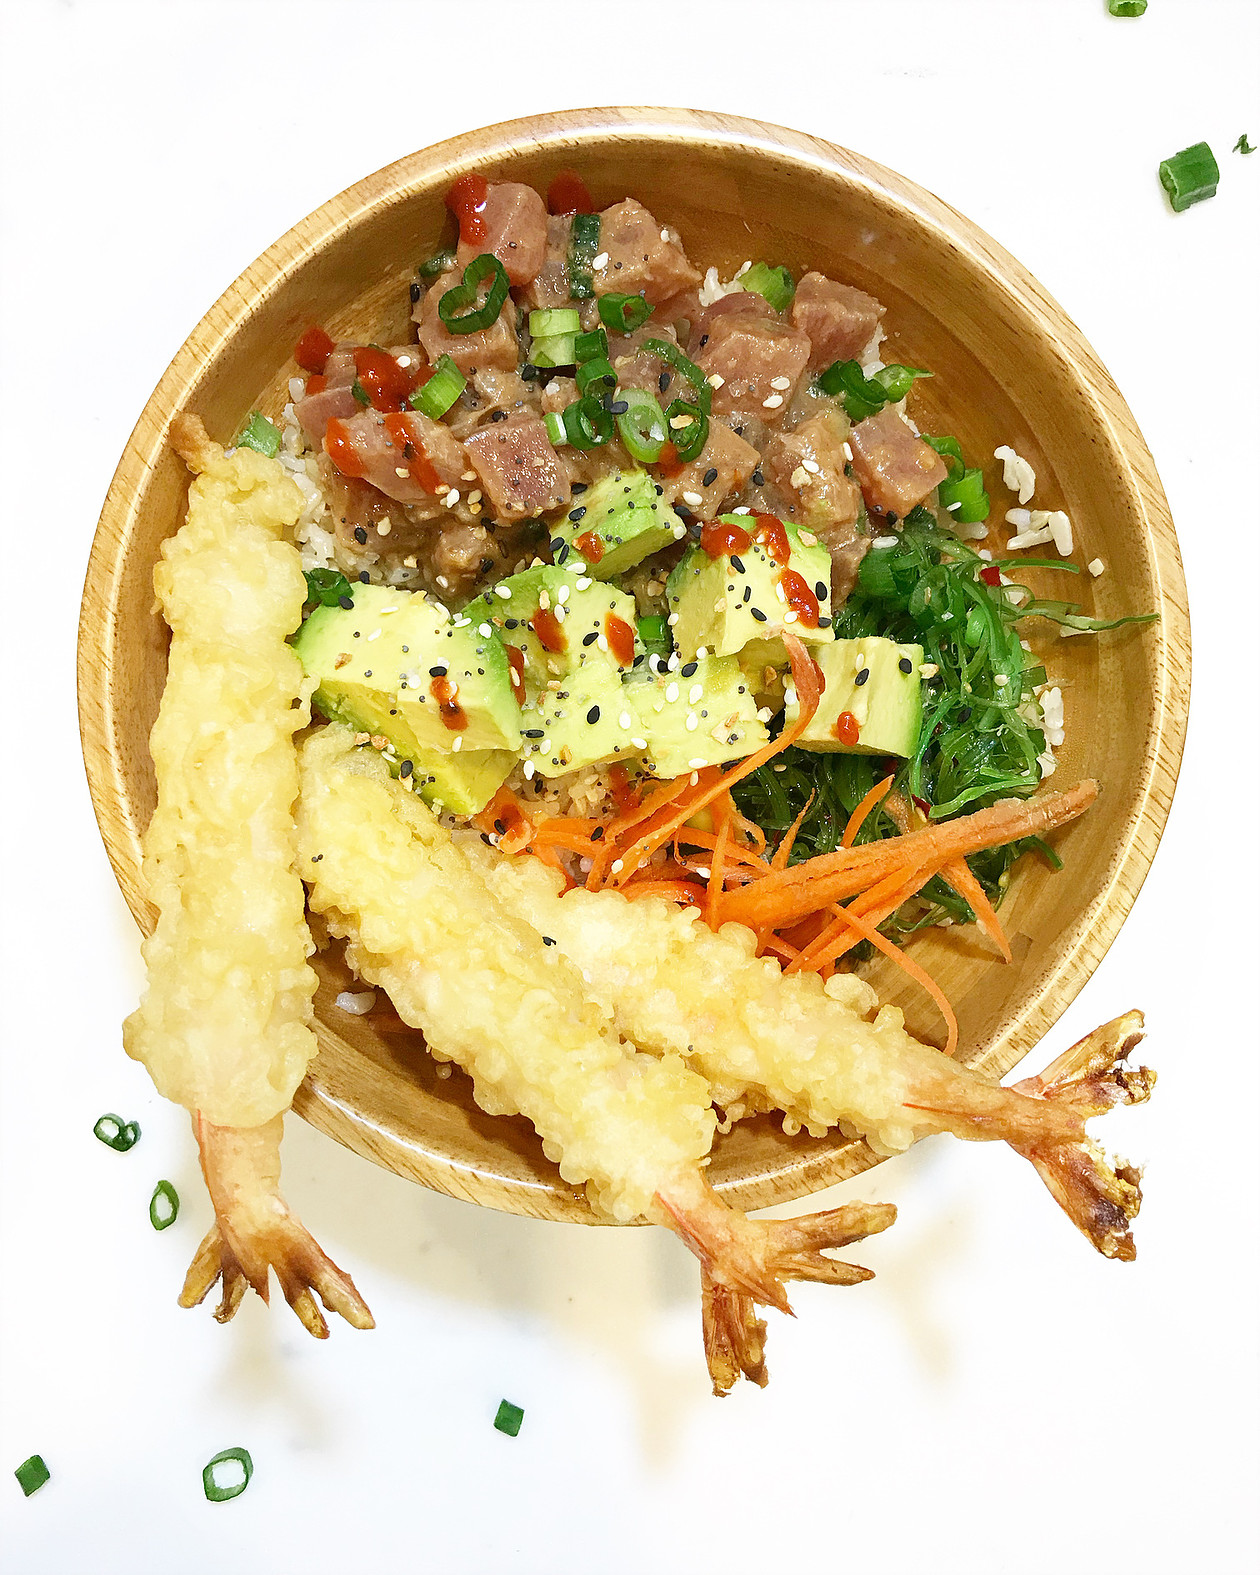 sushi bowl filled with spicy tuna, avocado, shrimp tempura and rice